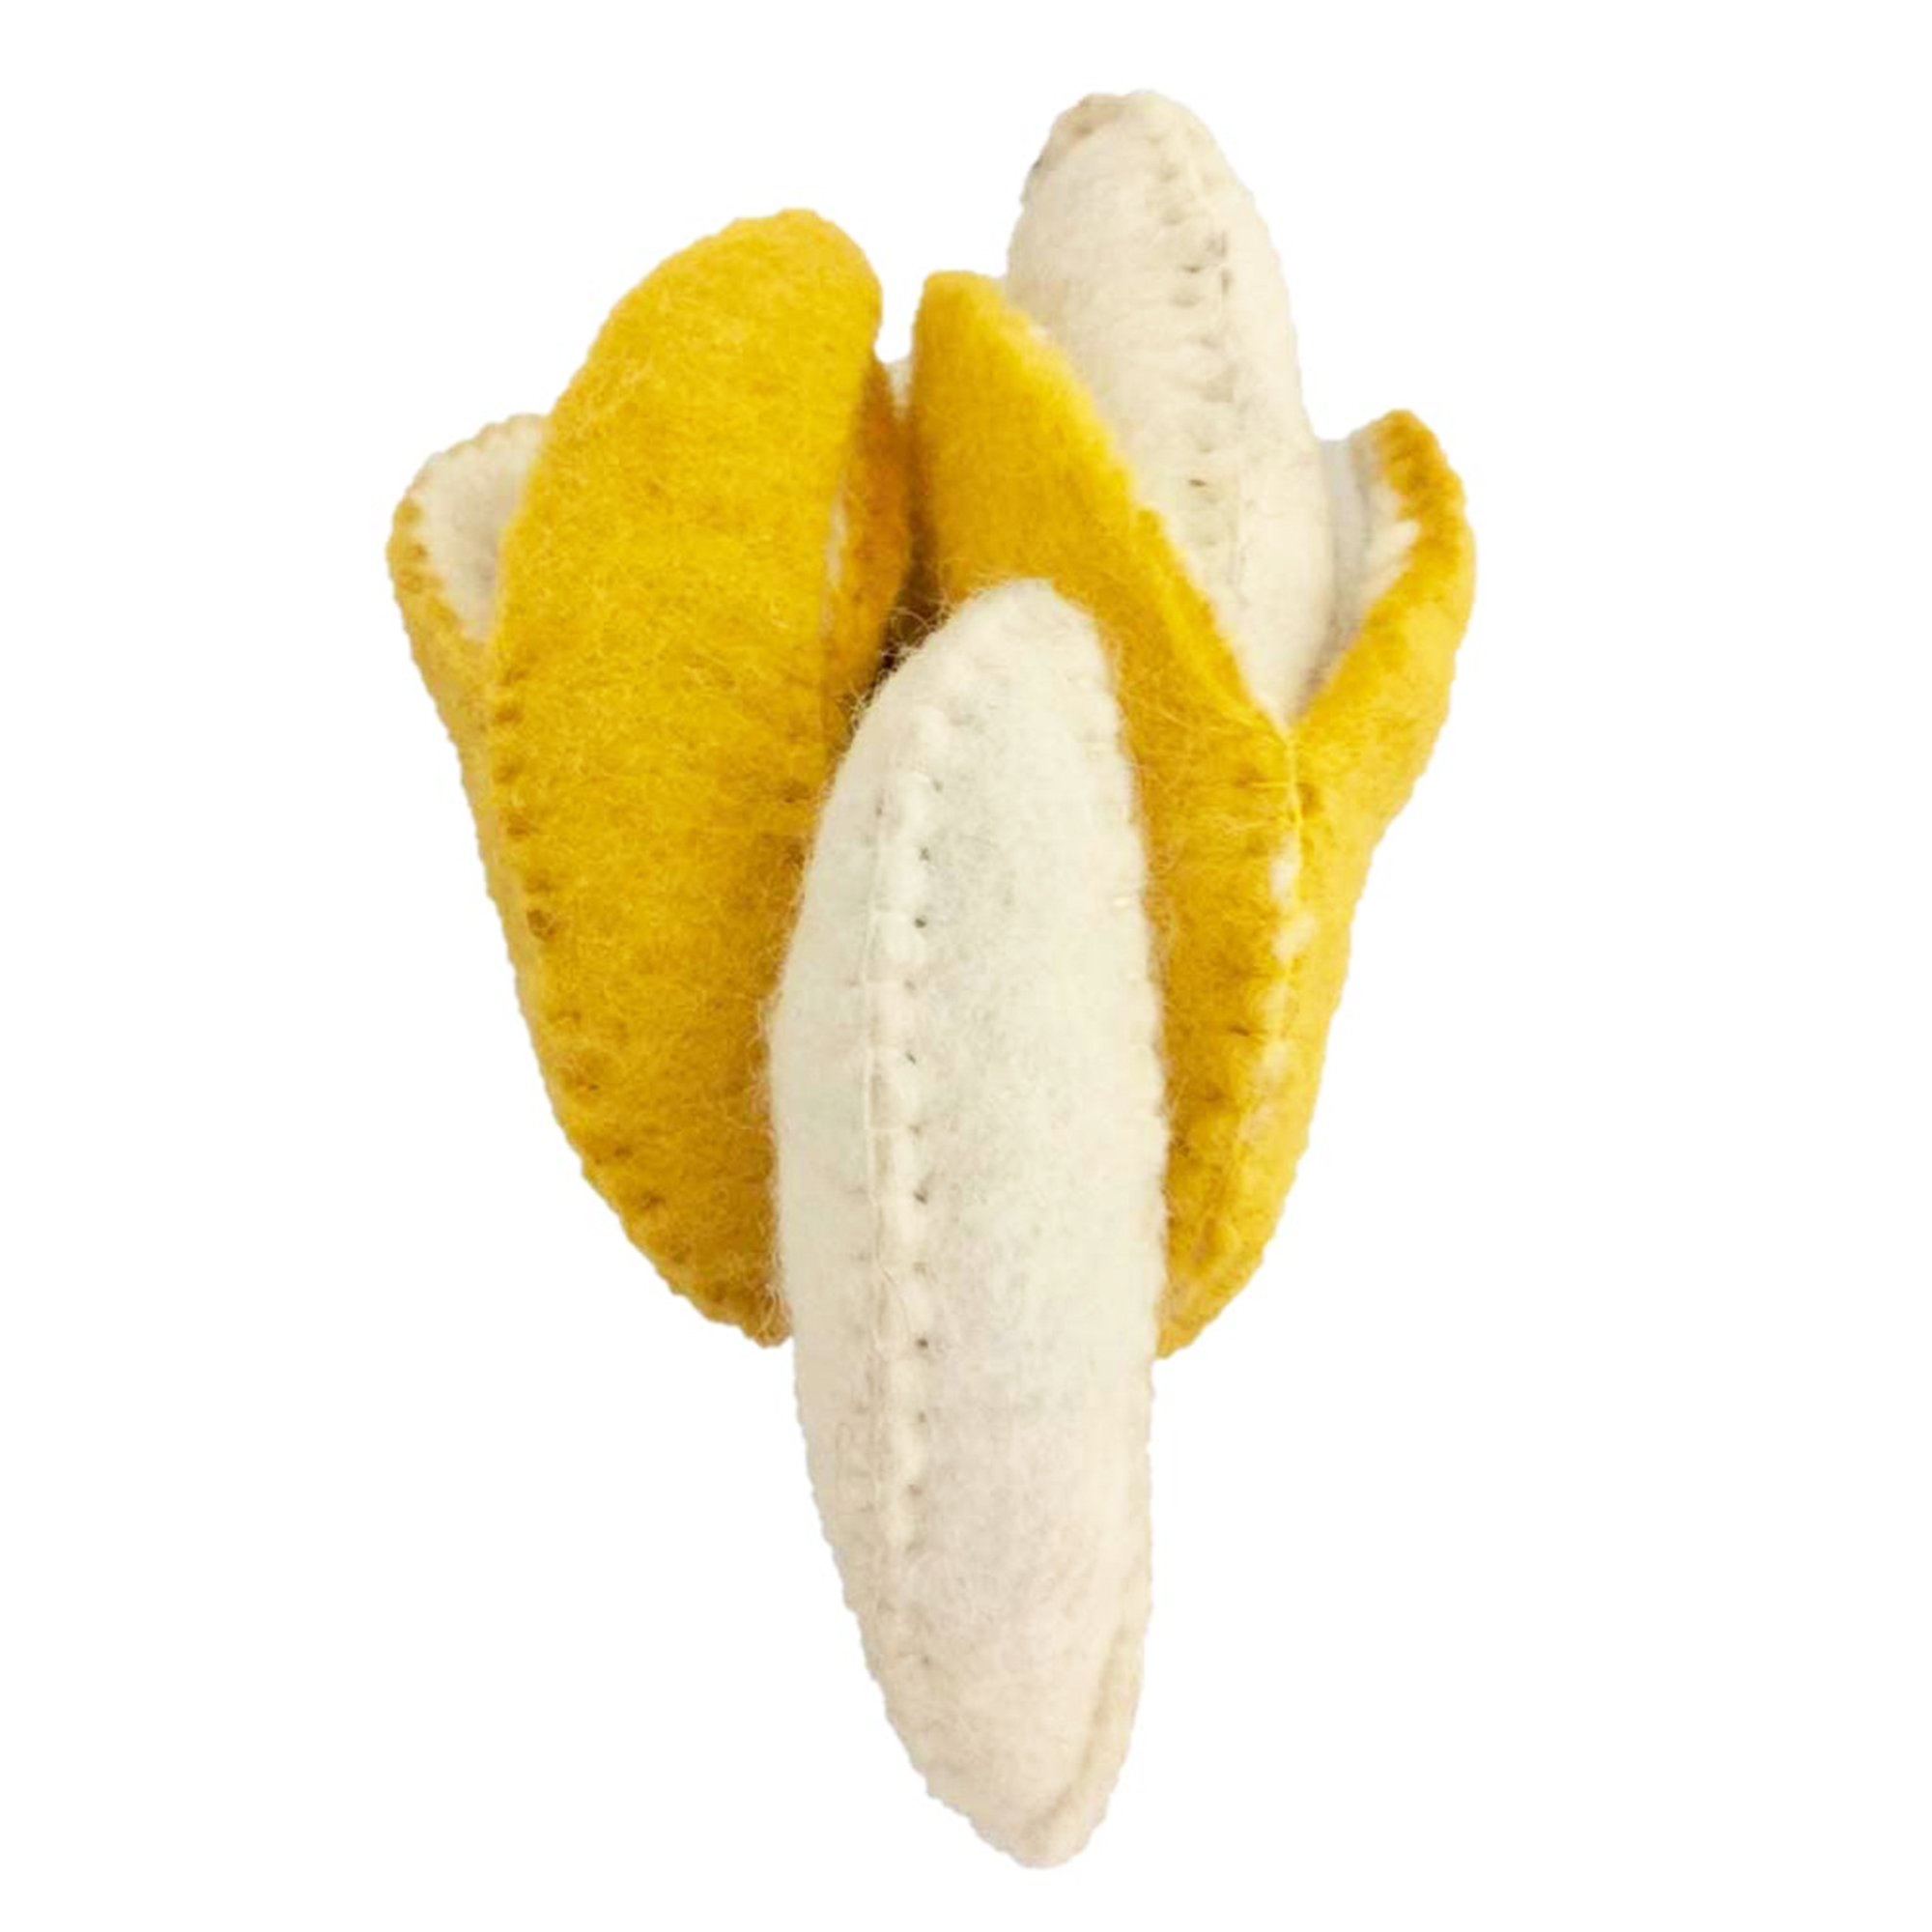 Food - Banana 2 pcs  